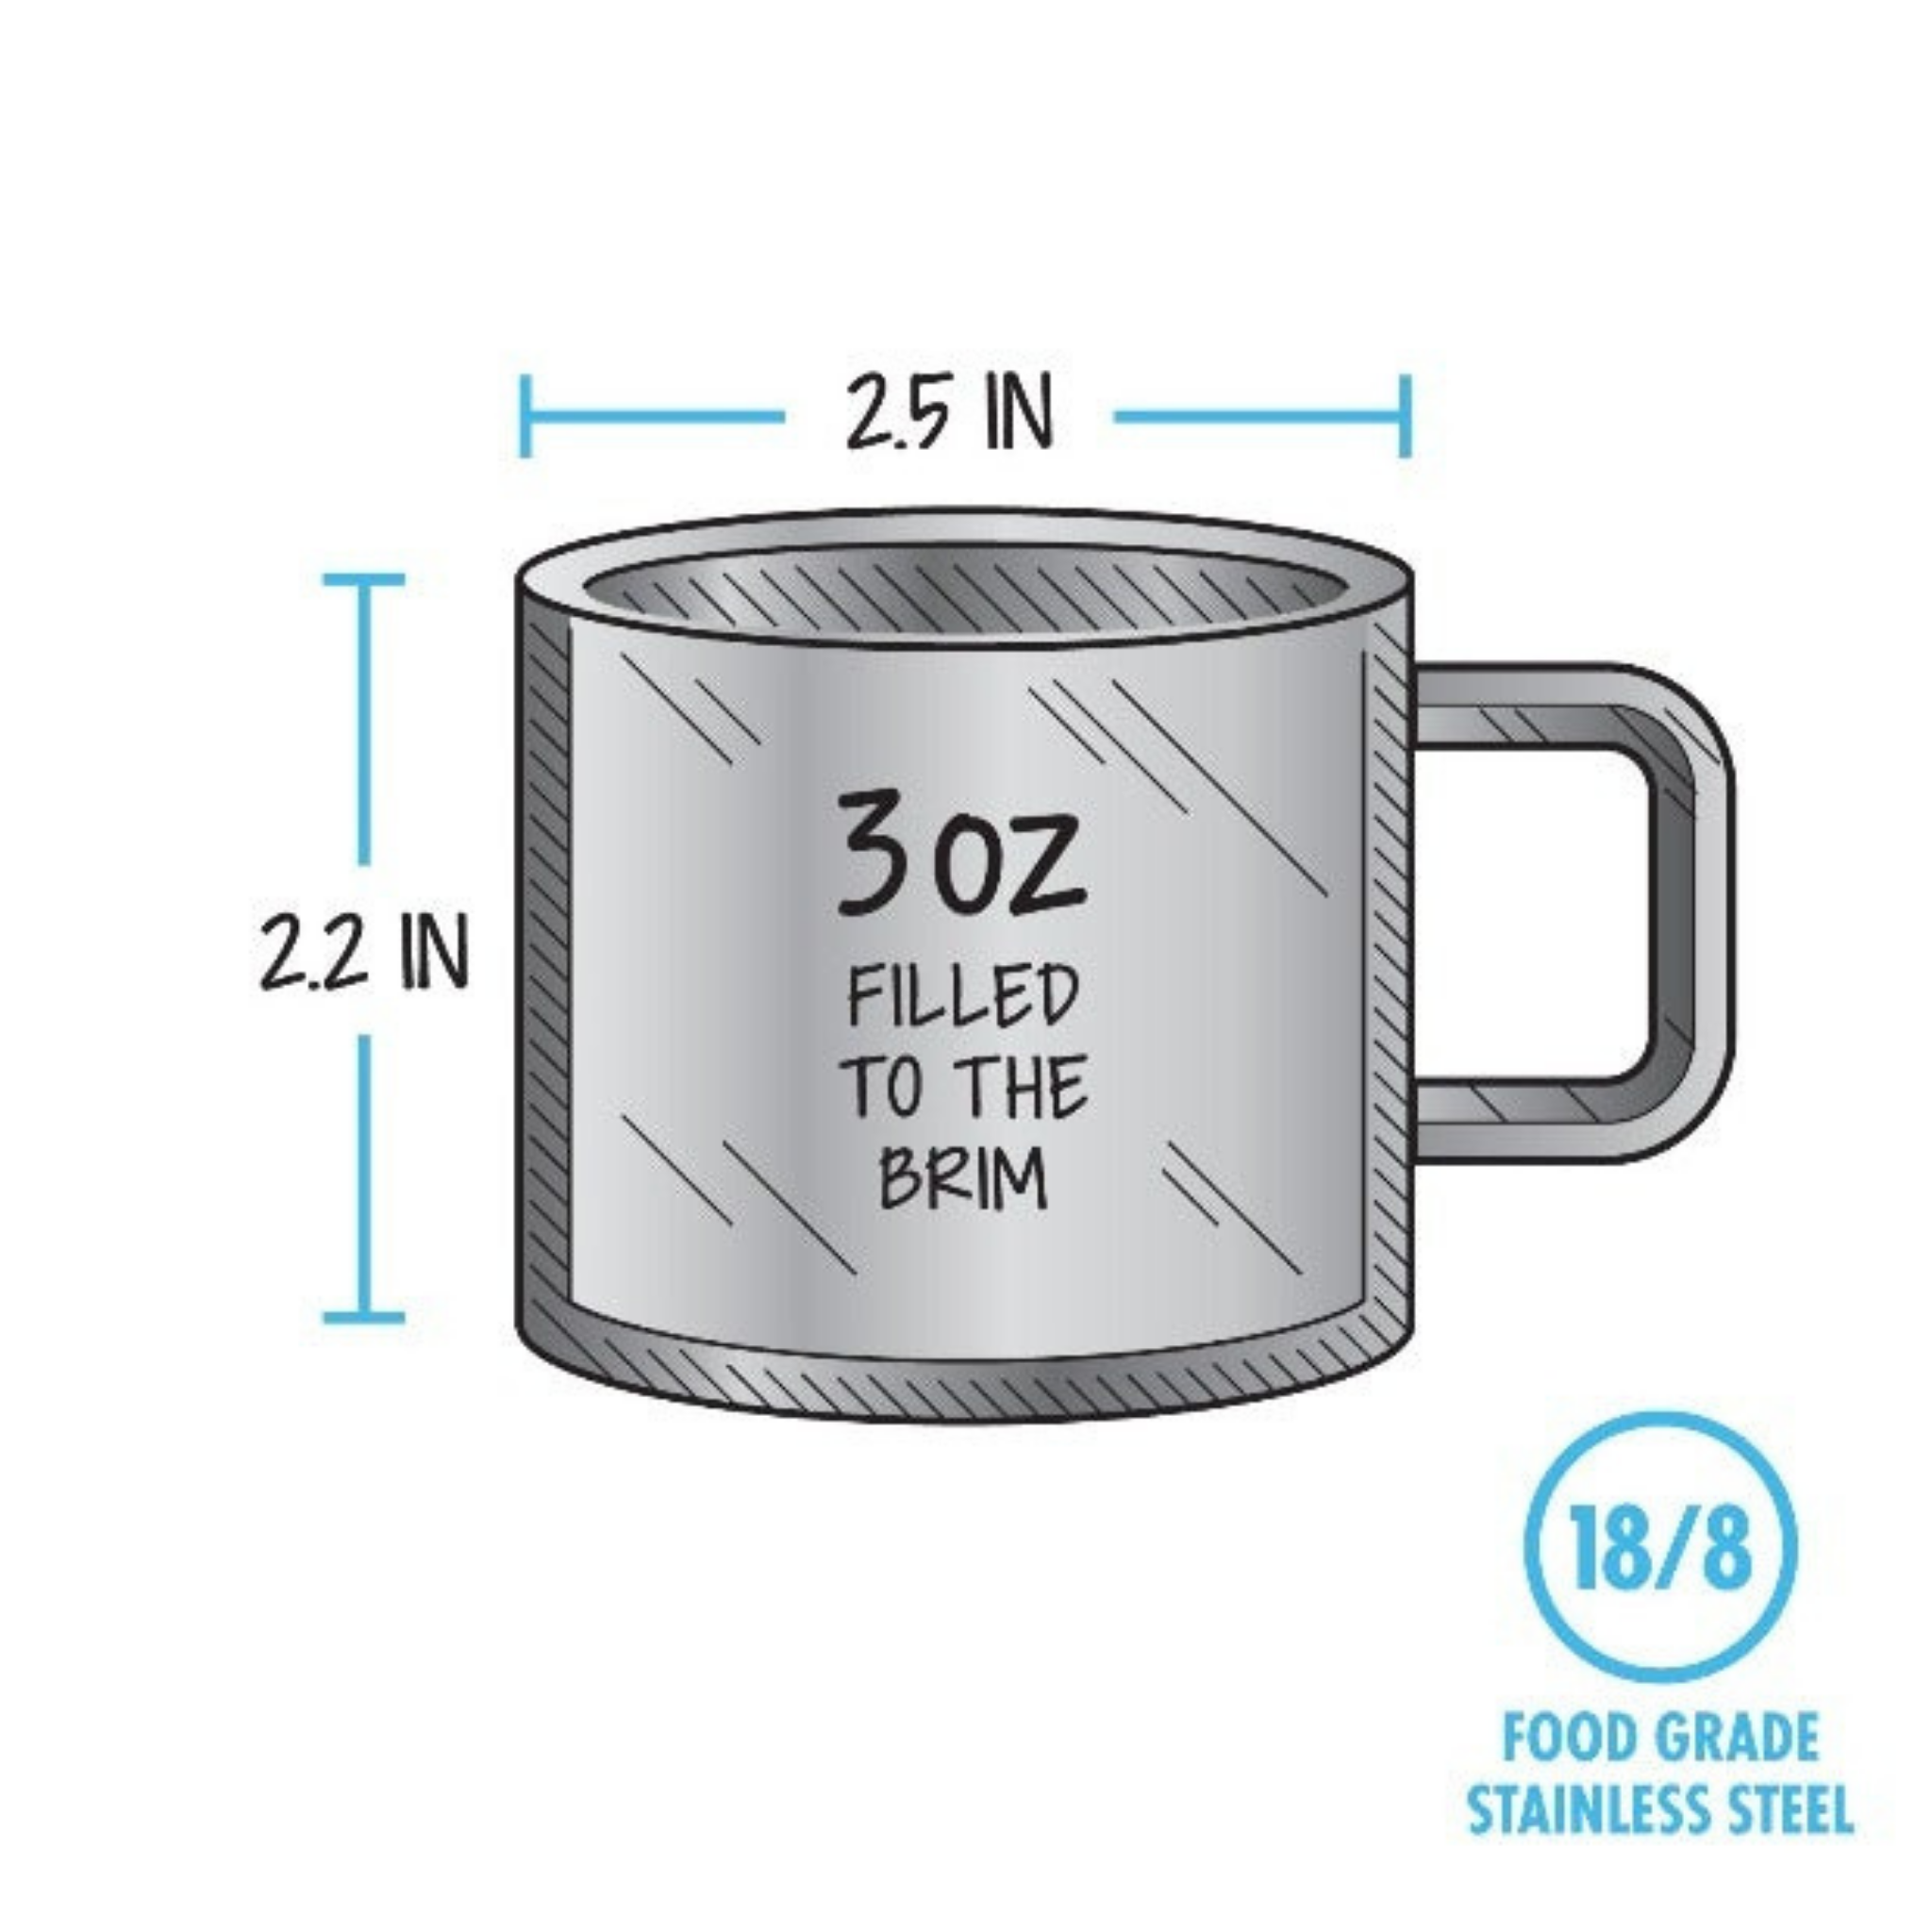 BTäT- Insulated Espresso Cups (5 oz) set of 4 – BTAT